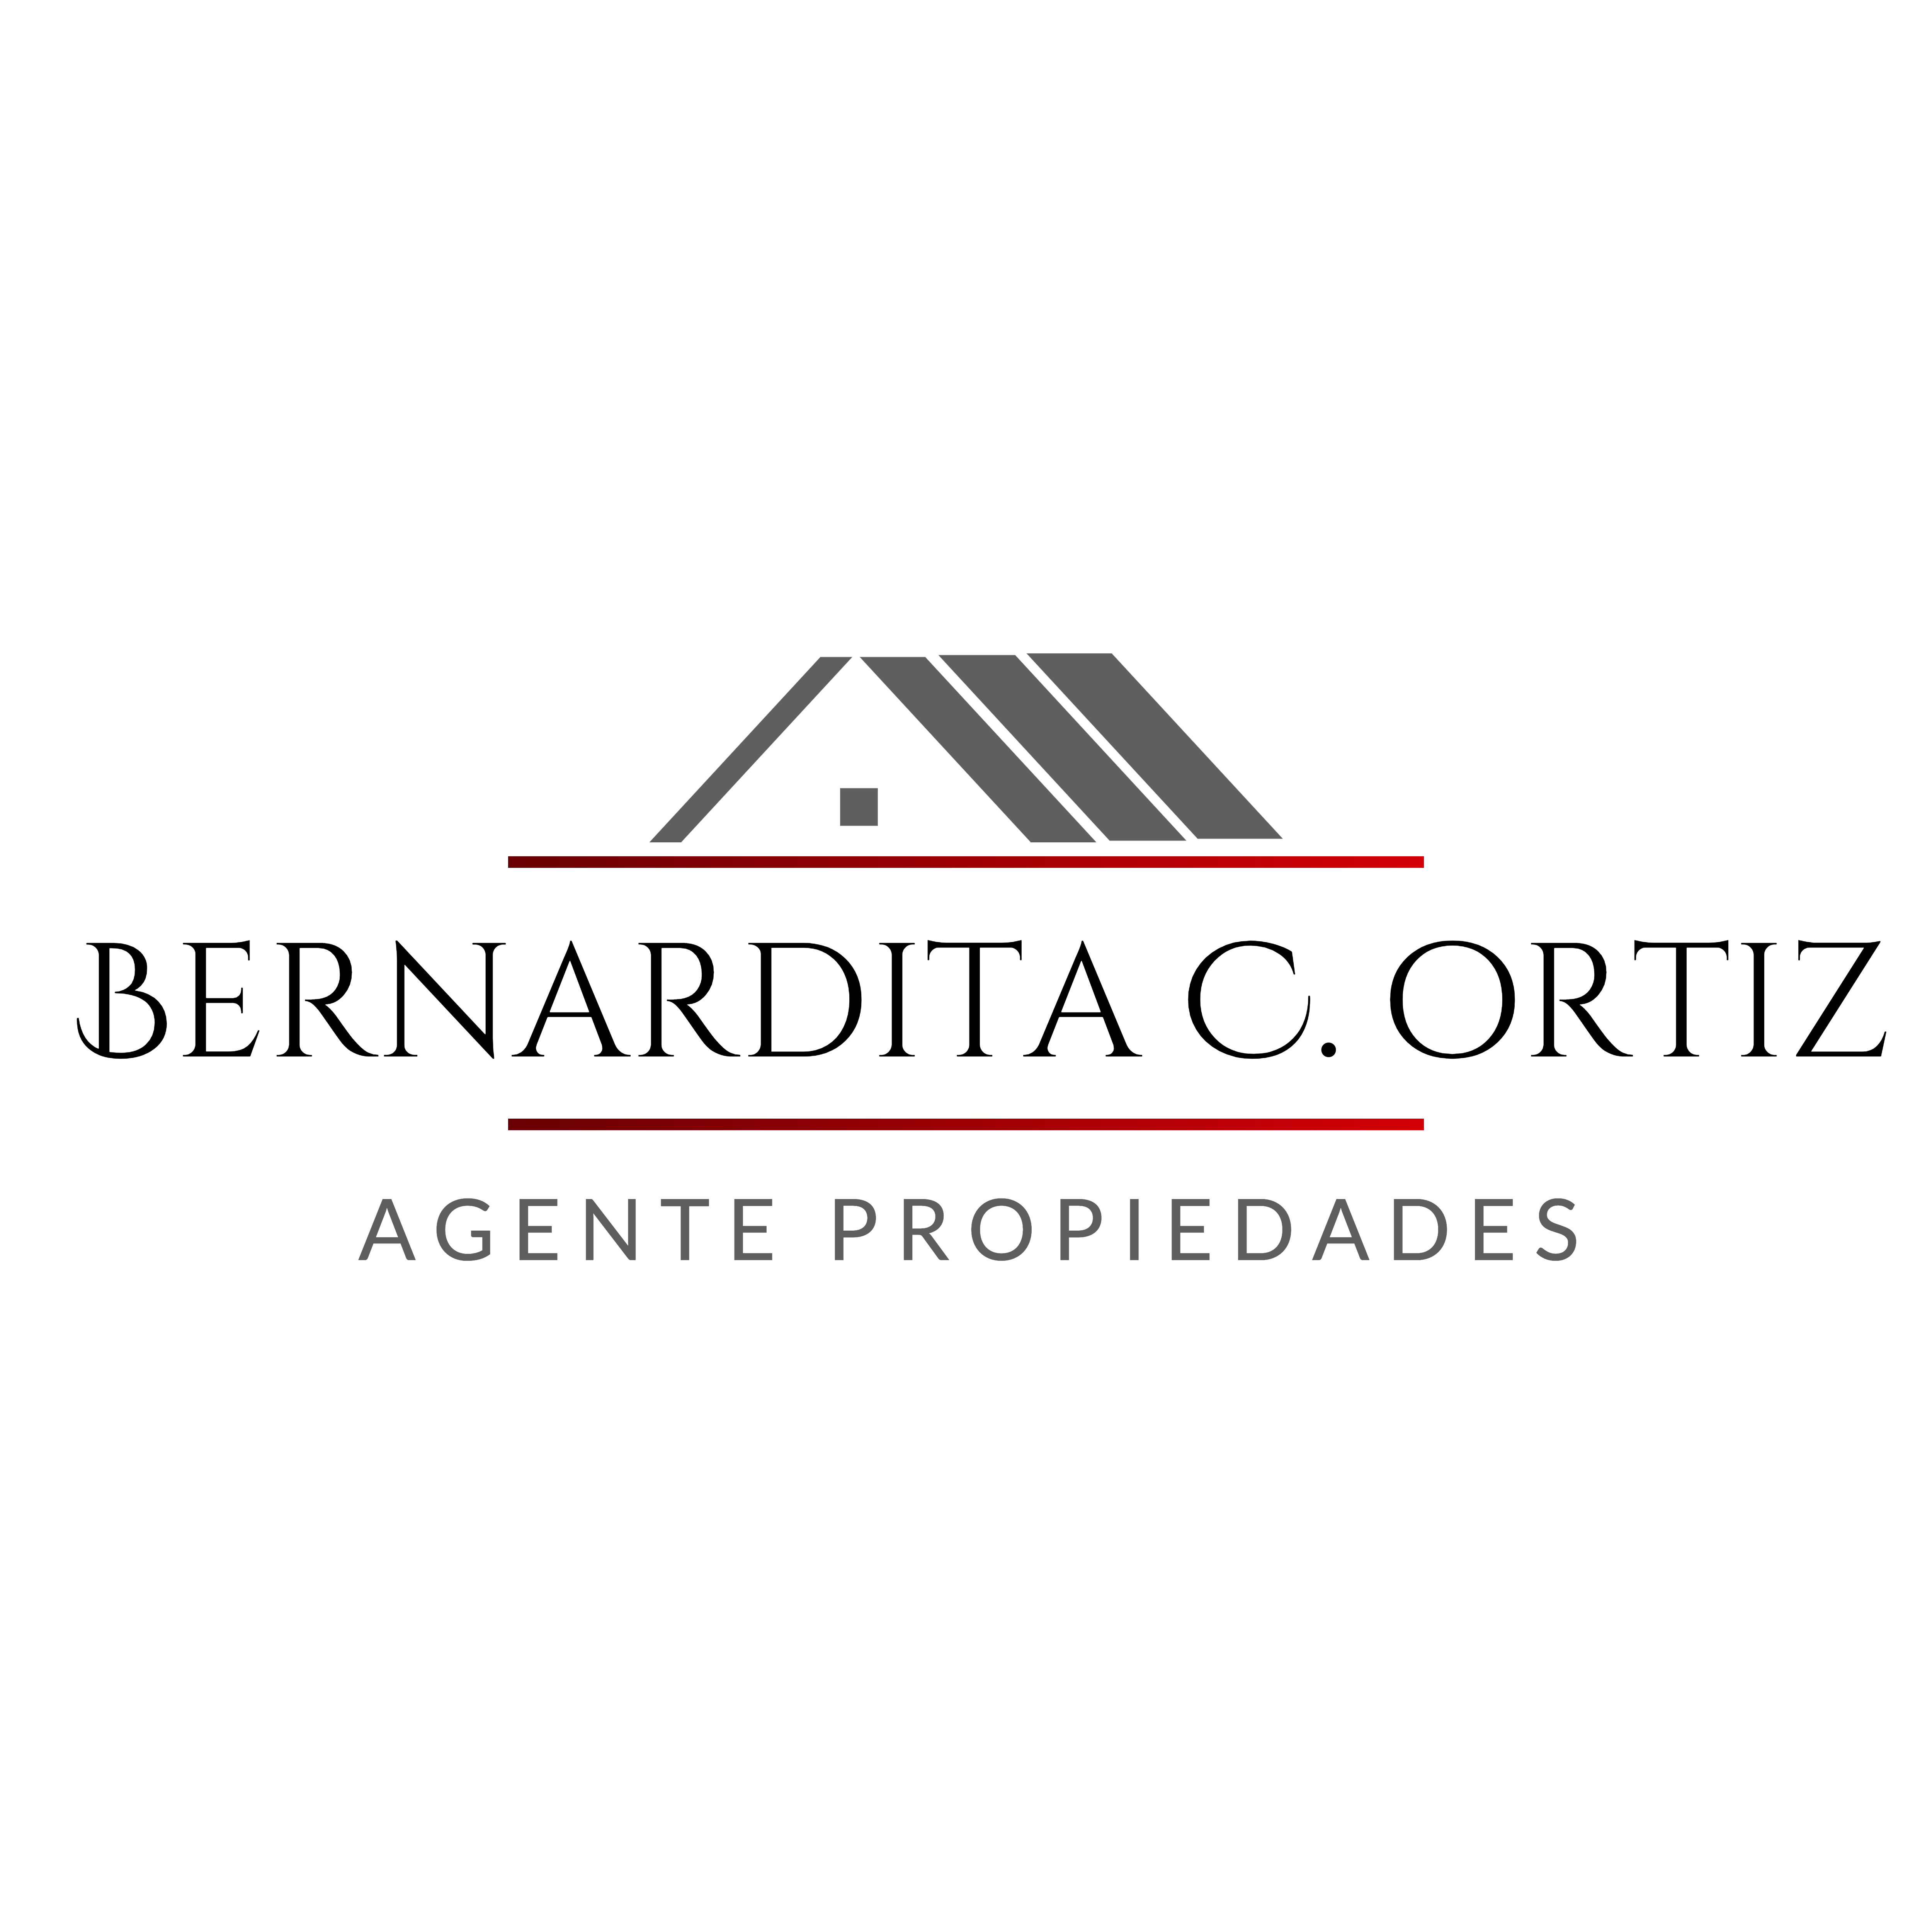 BERNARDITA ORTIZ AGENTE PROPIEDADES